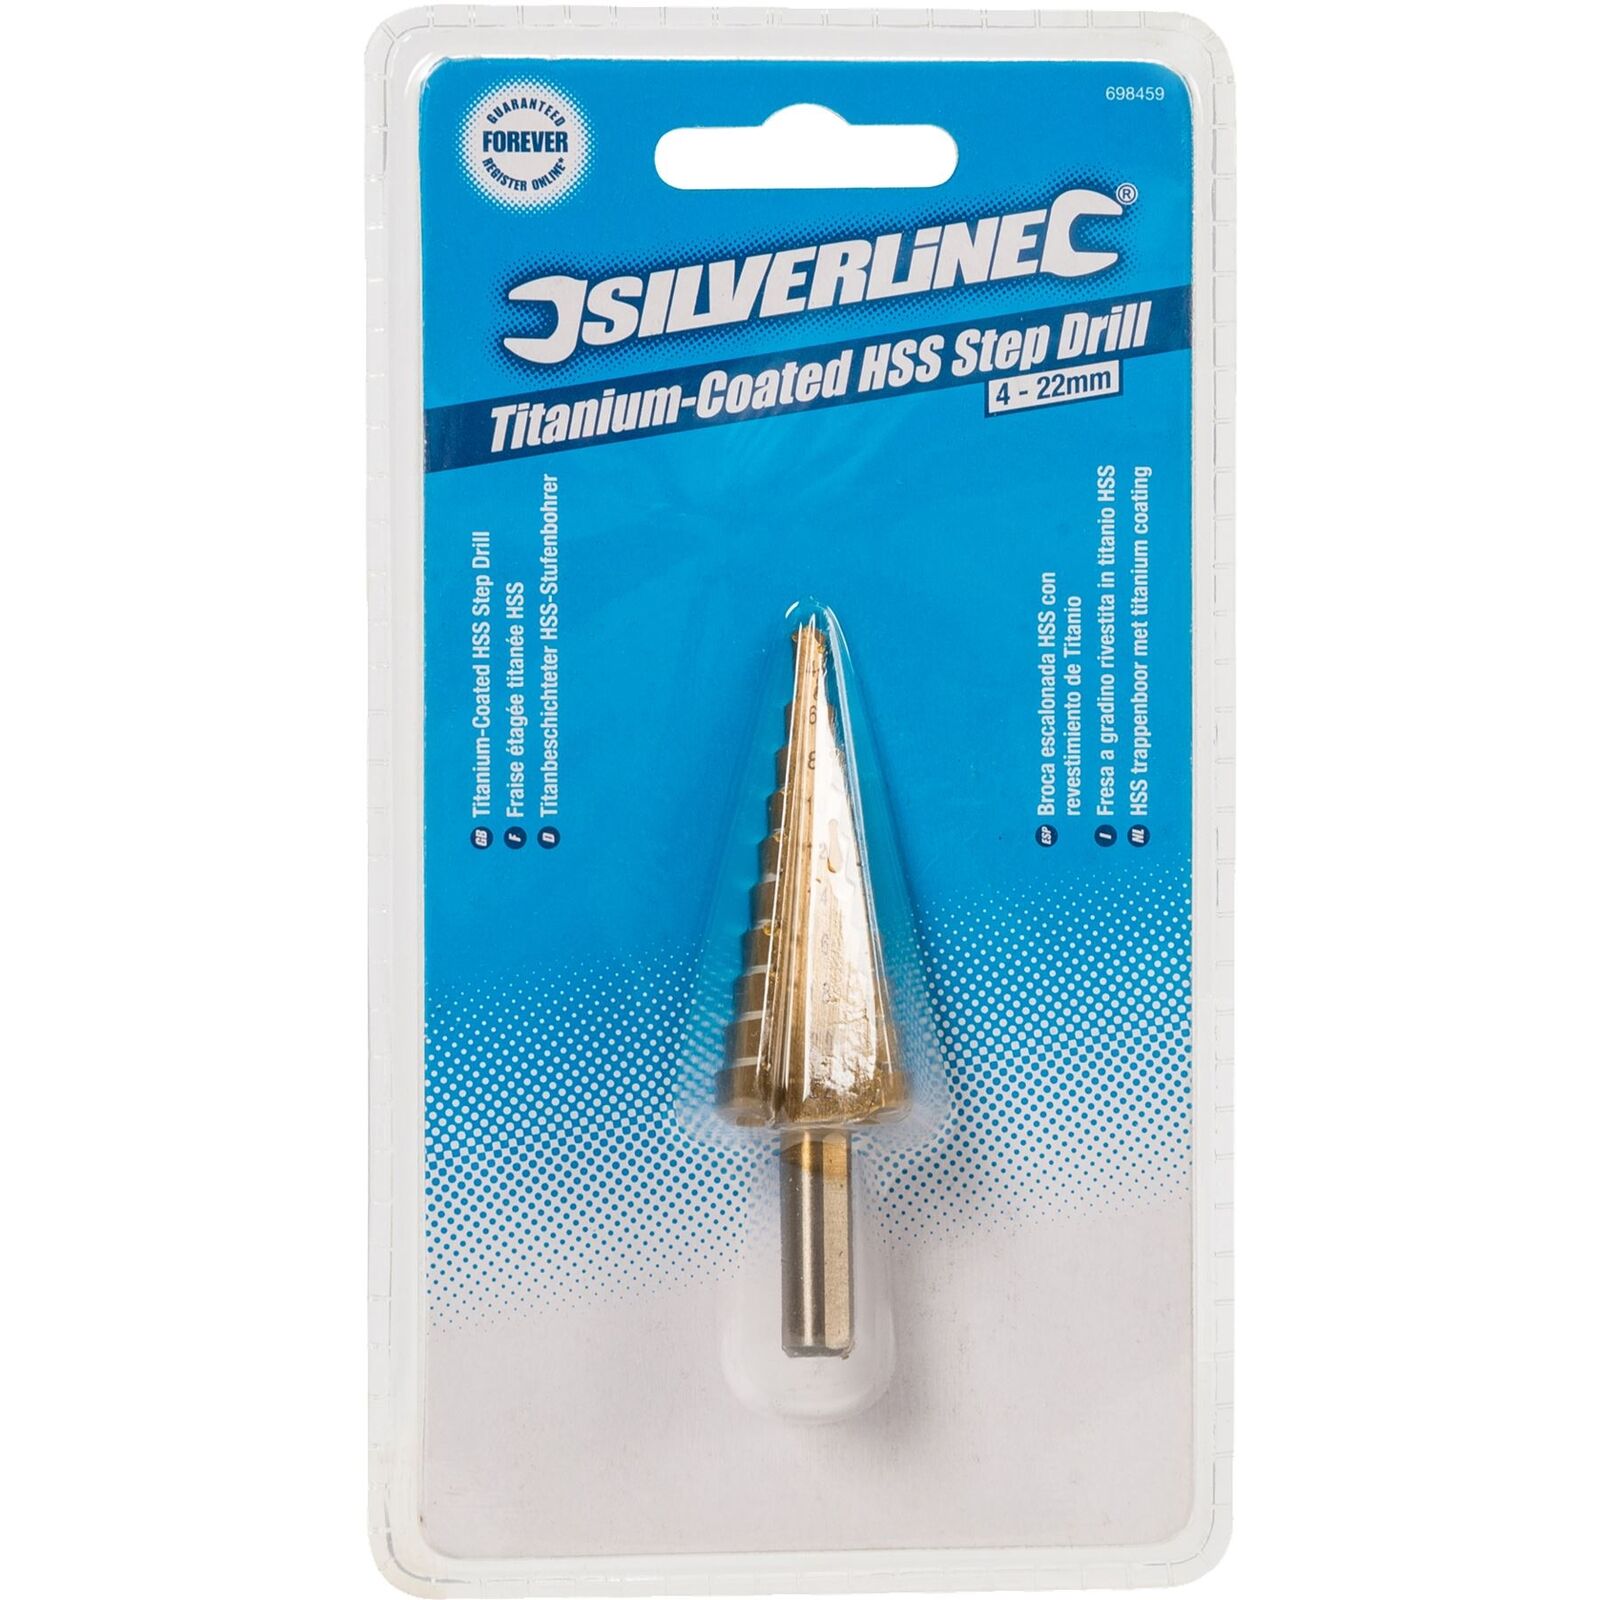 Silverline Step Drill HSS Steel Titanium Cone Bit Hole Metal Cutter Tool 4-22mm